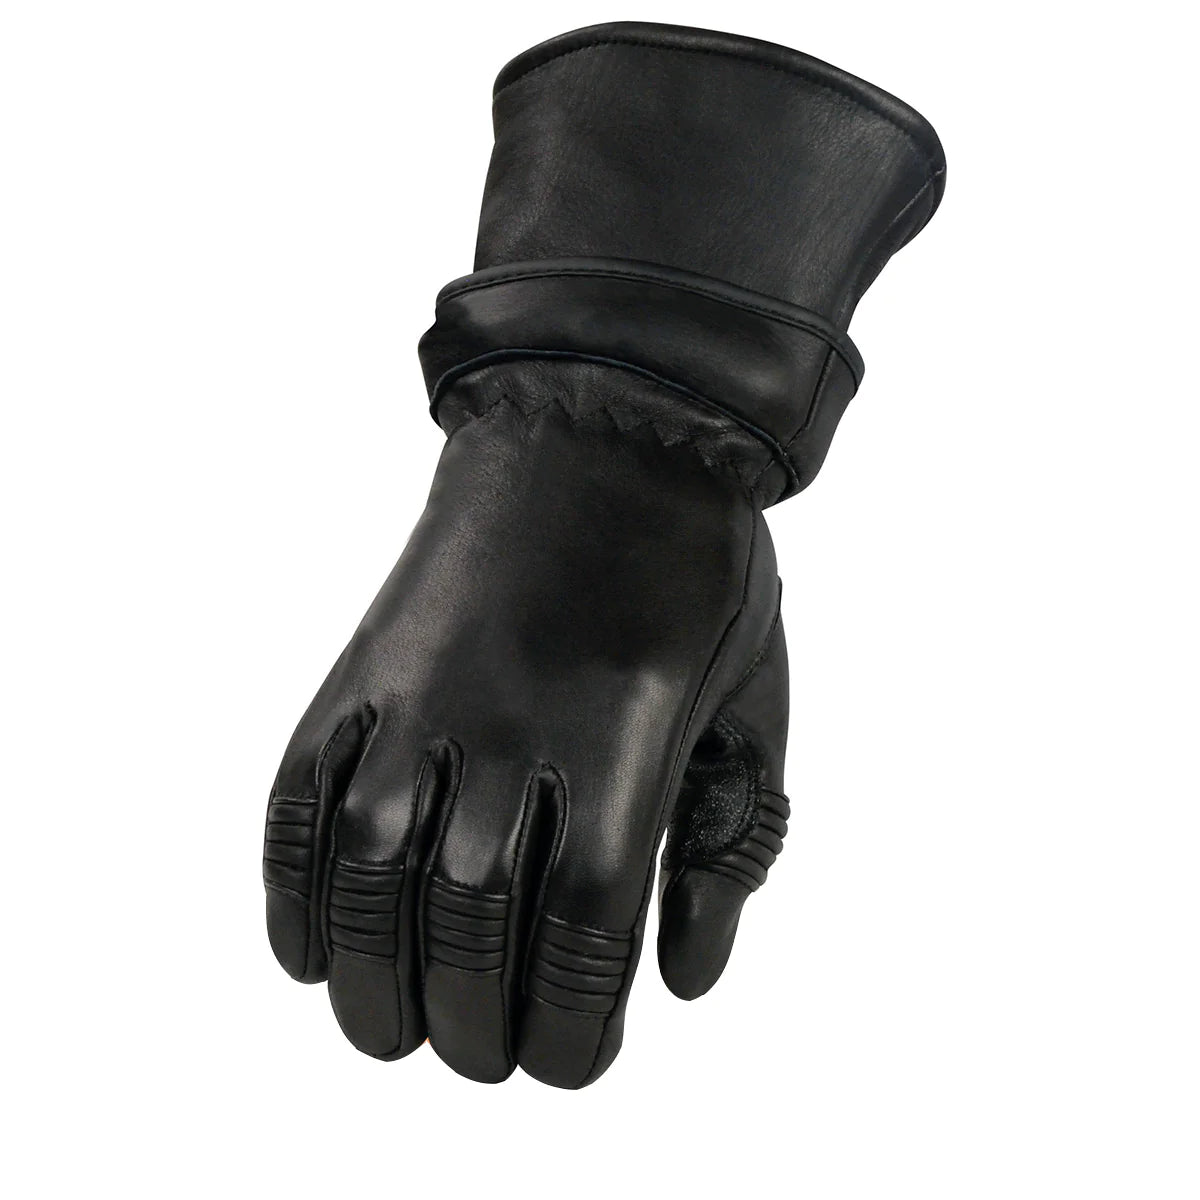 Men's Black Deerskin Leather Gauntlet Gloves with Gel Palm